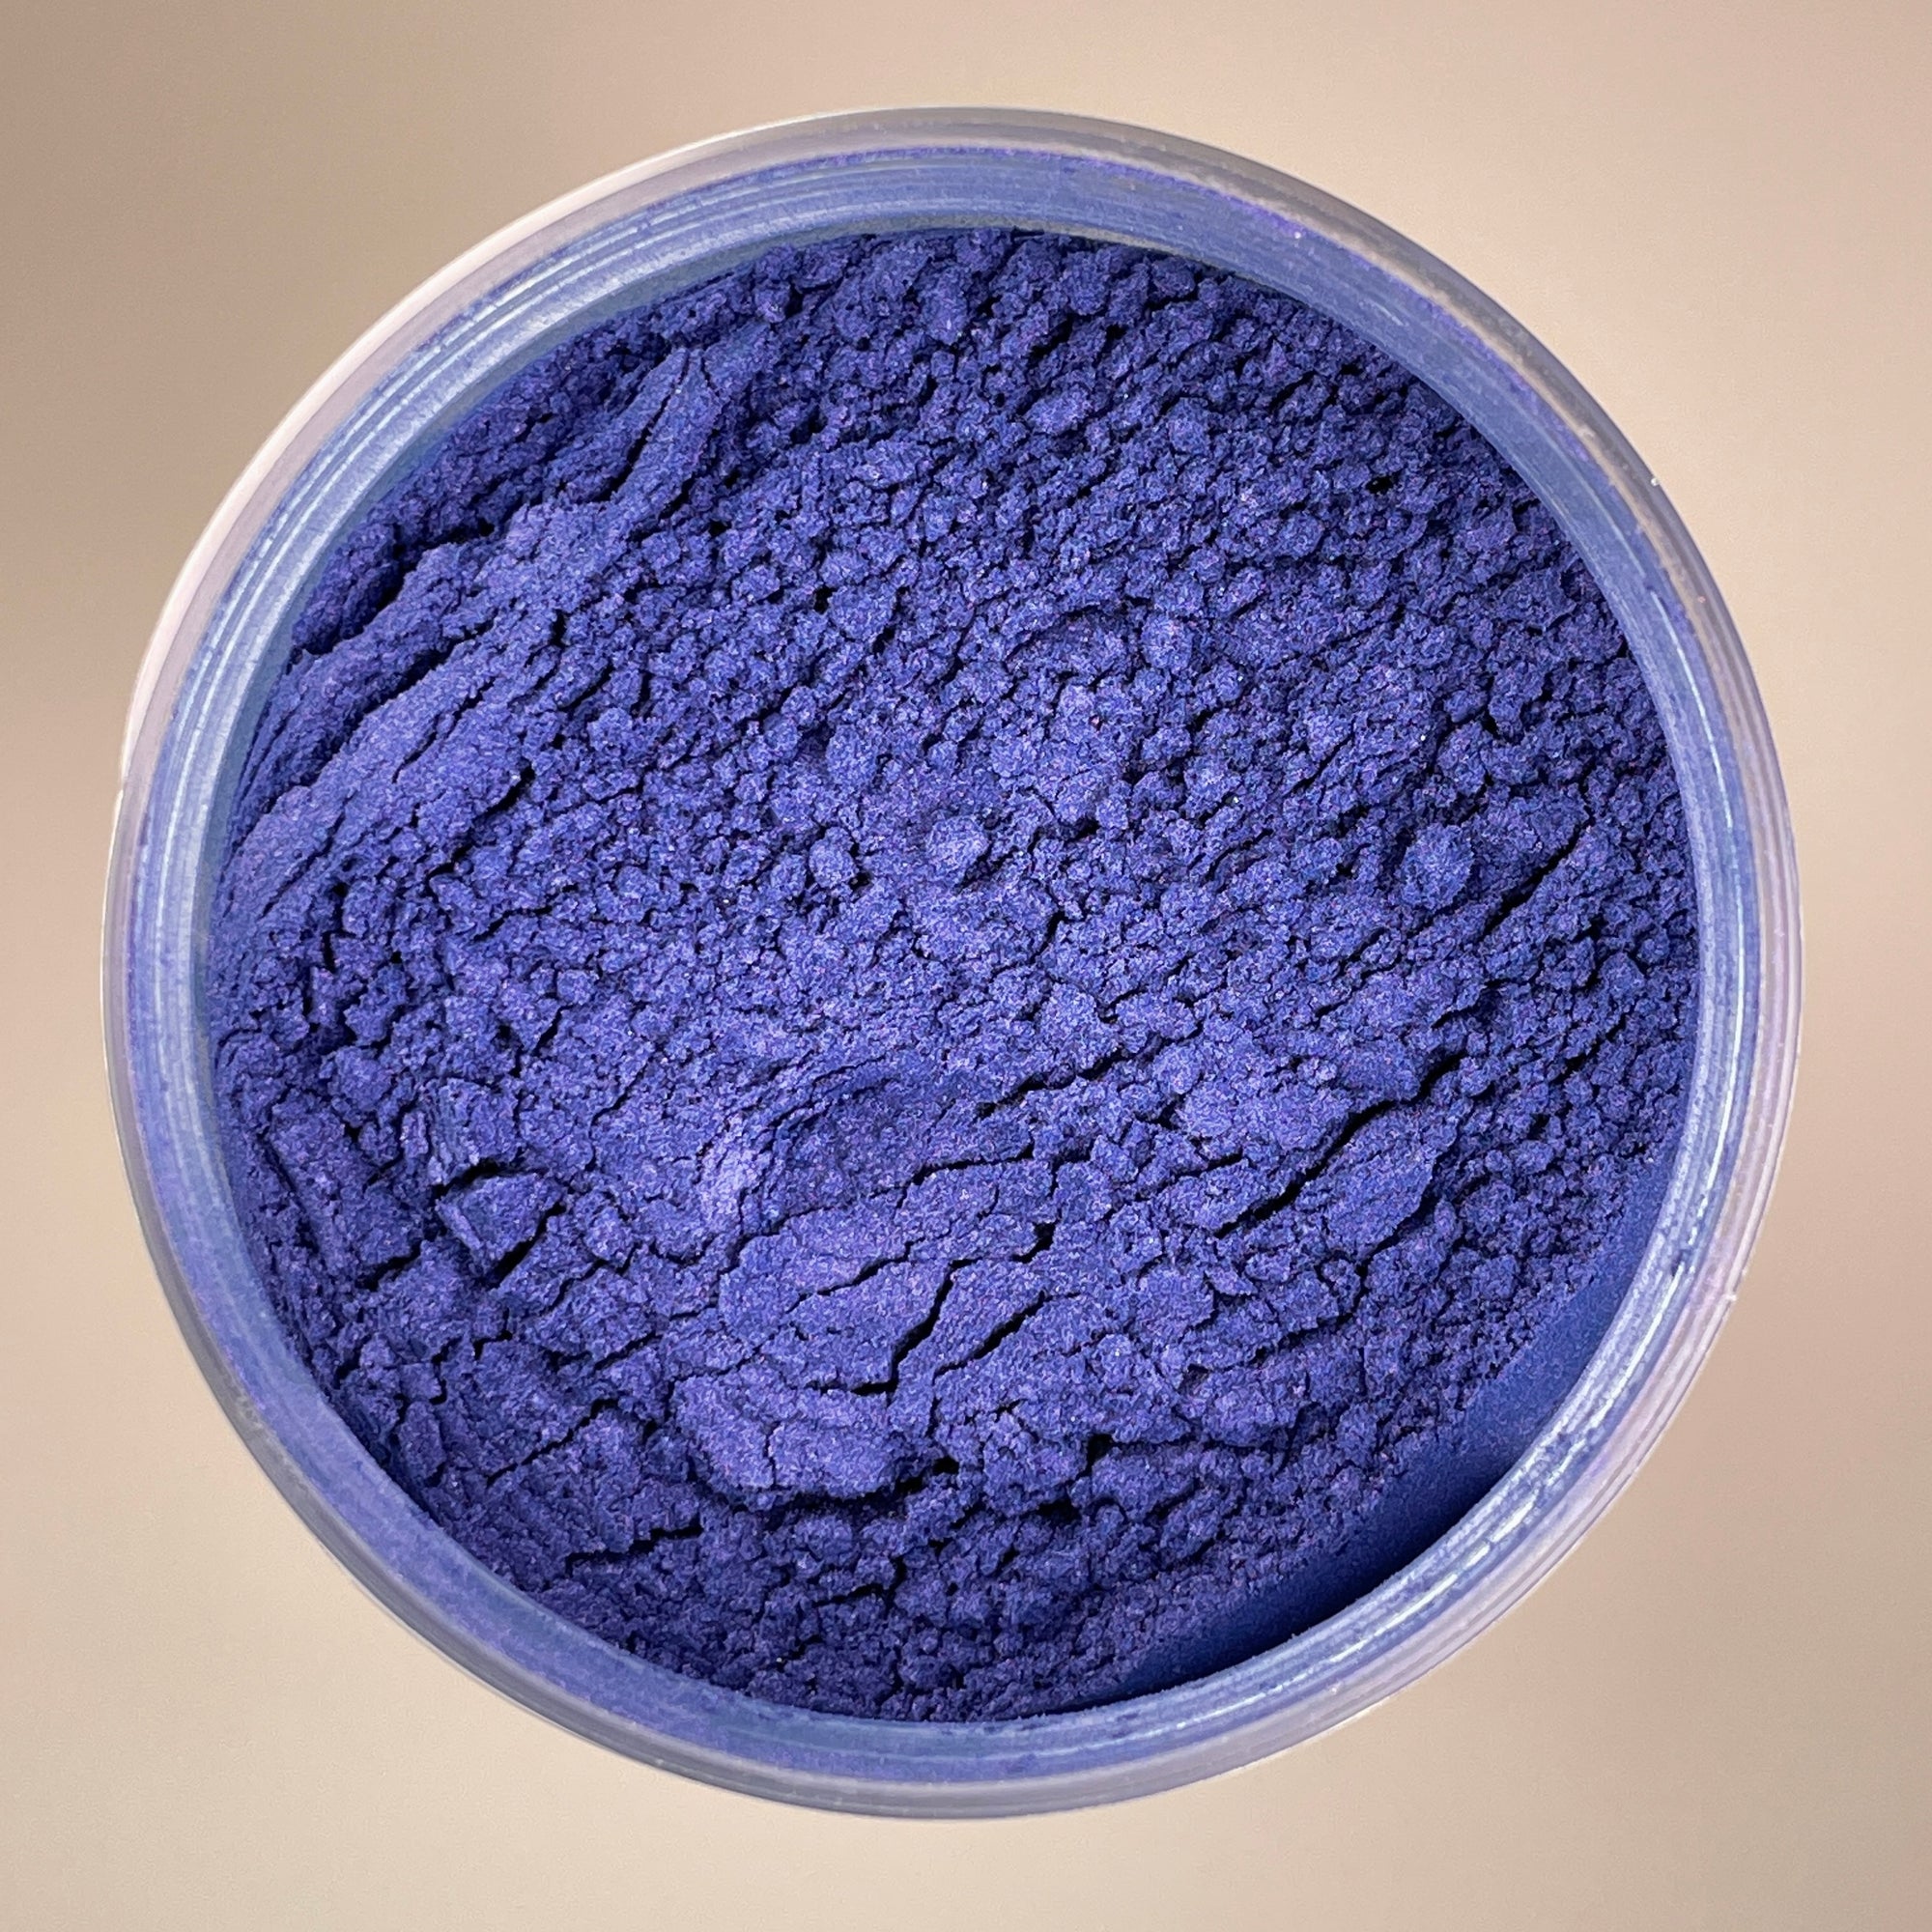 Blue Violet (C/S) Mica Powder